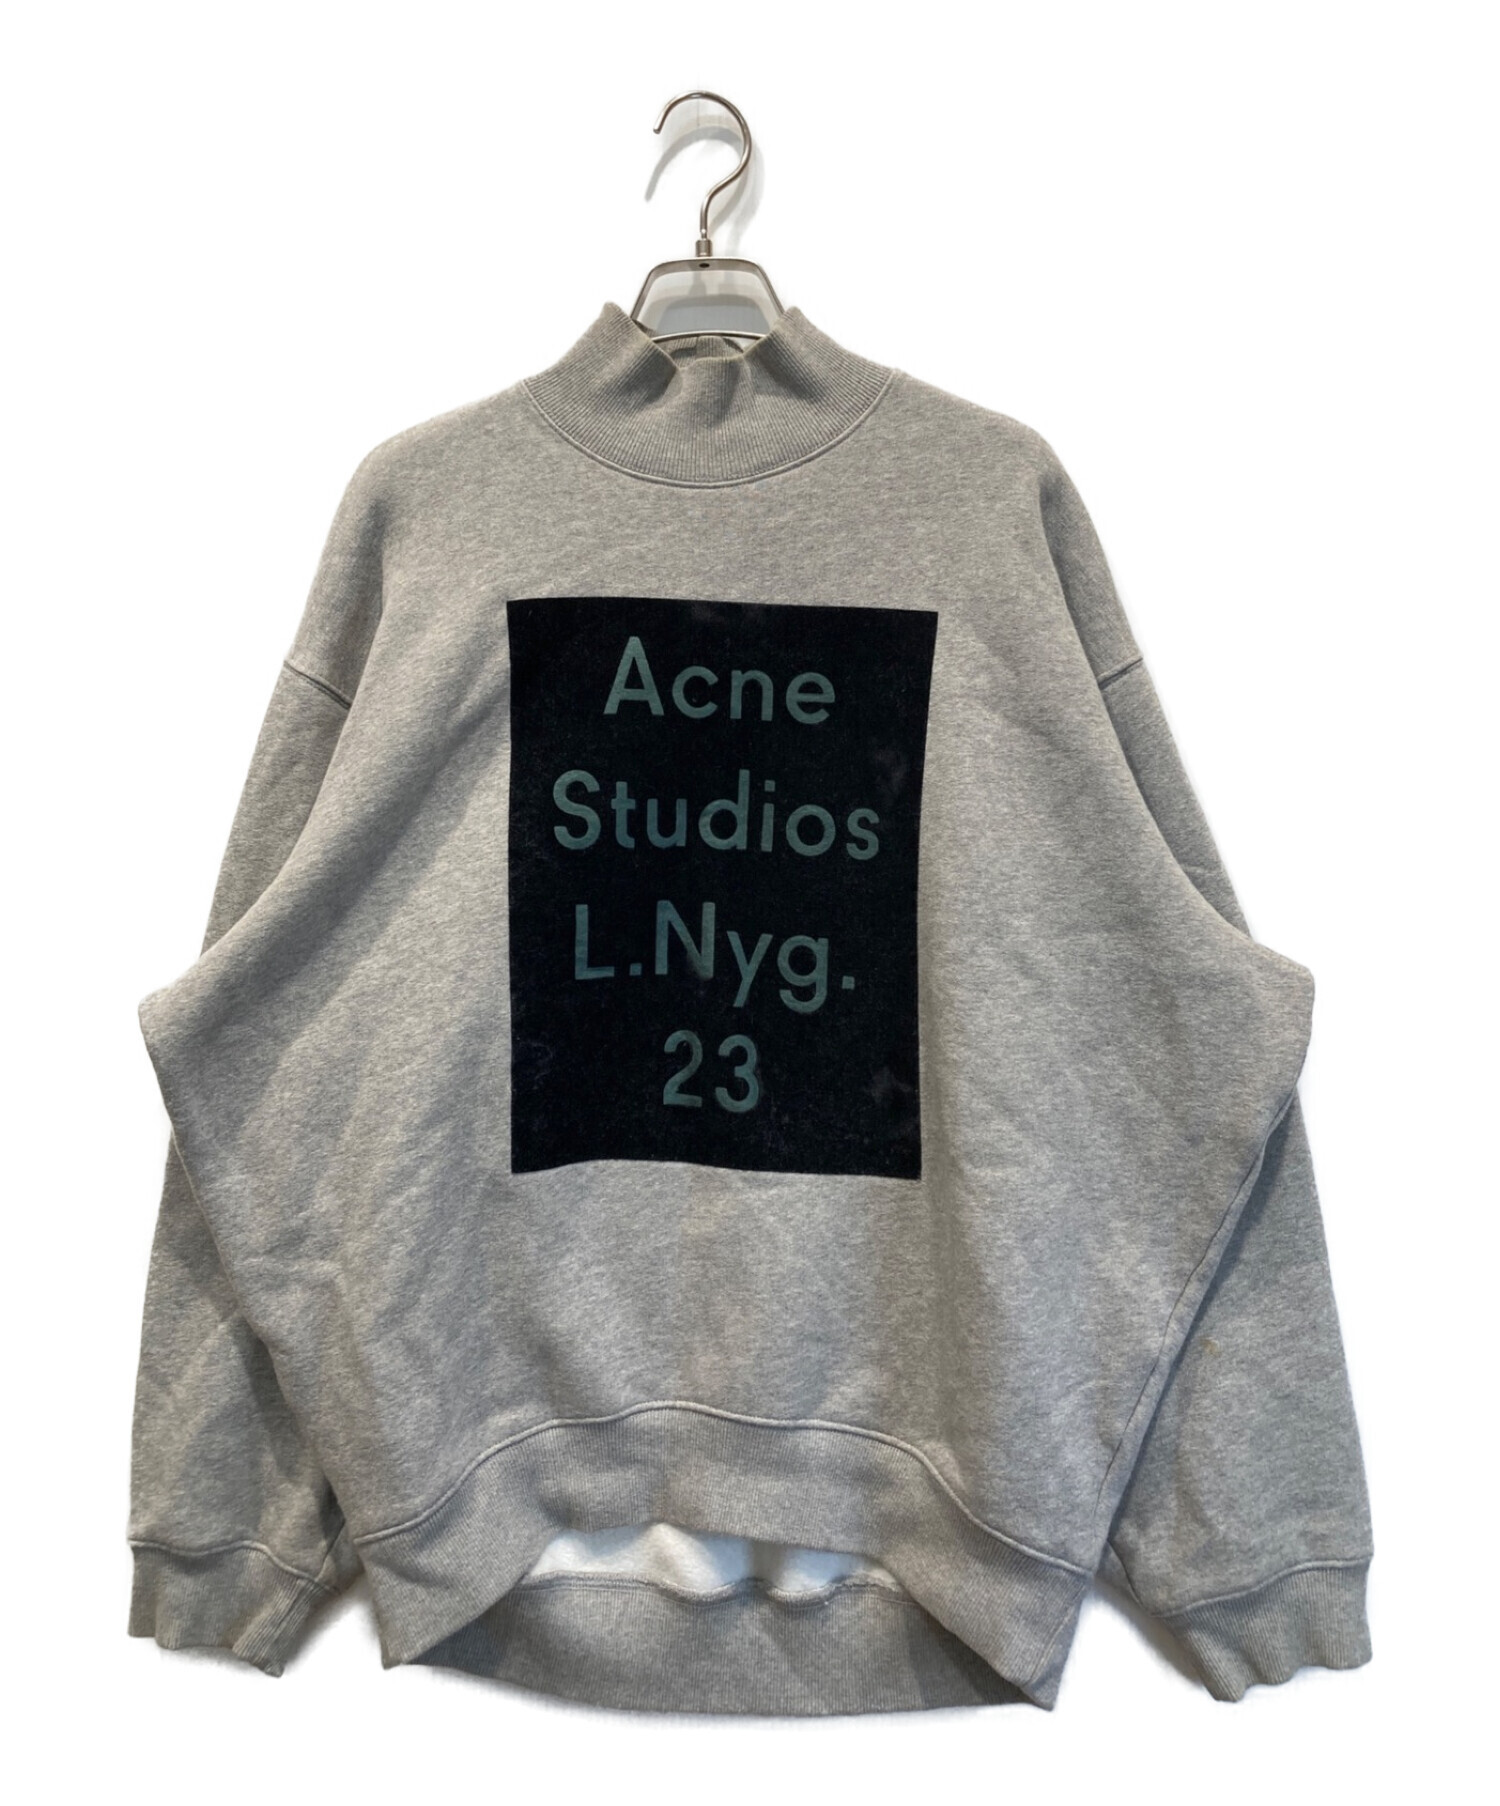 Acne Studios アクネストゥディオス スウェット - トレーナー/スウェット